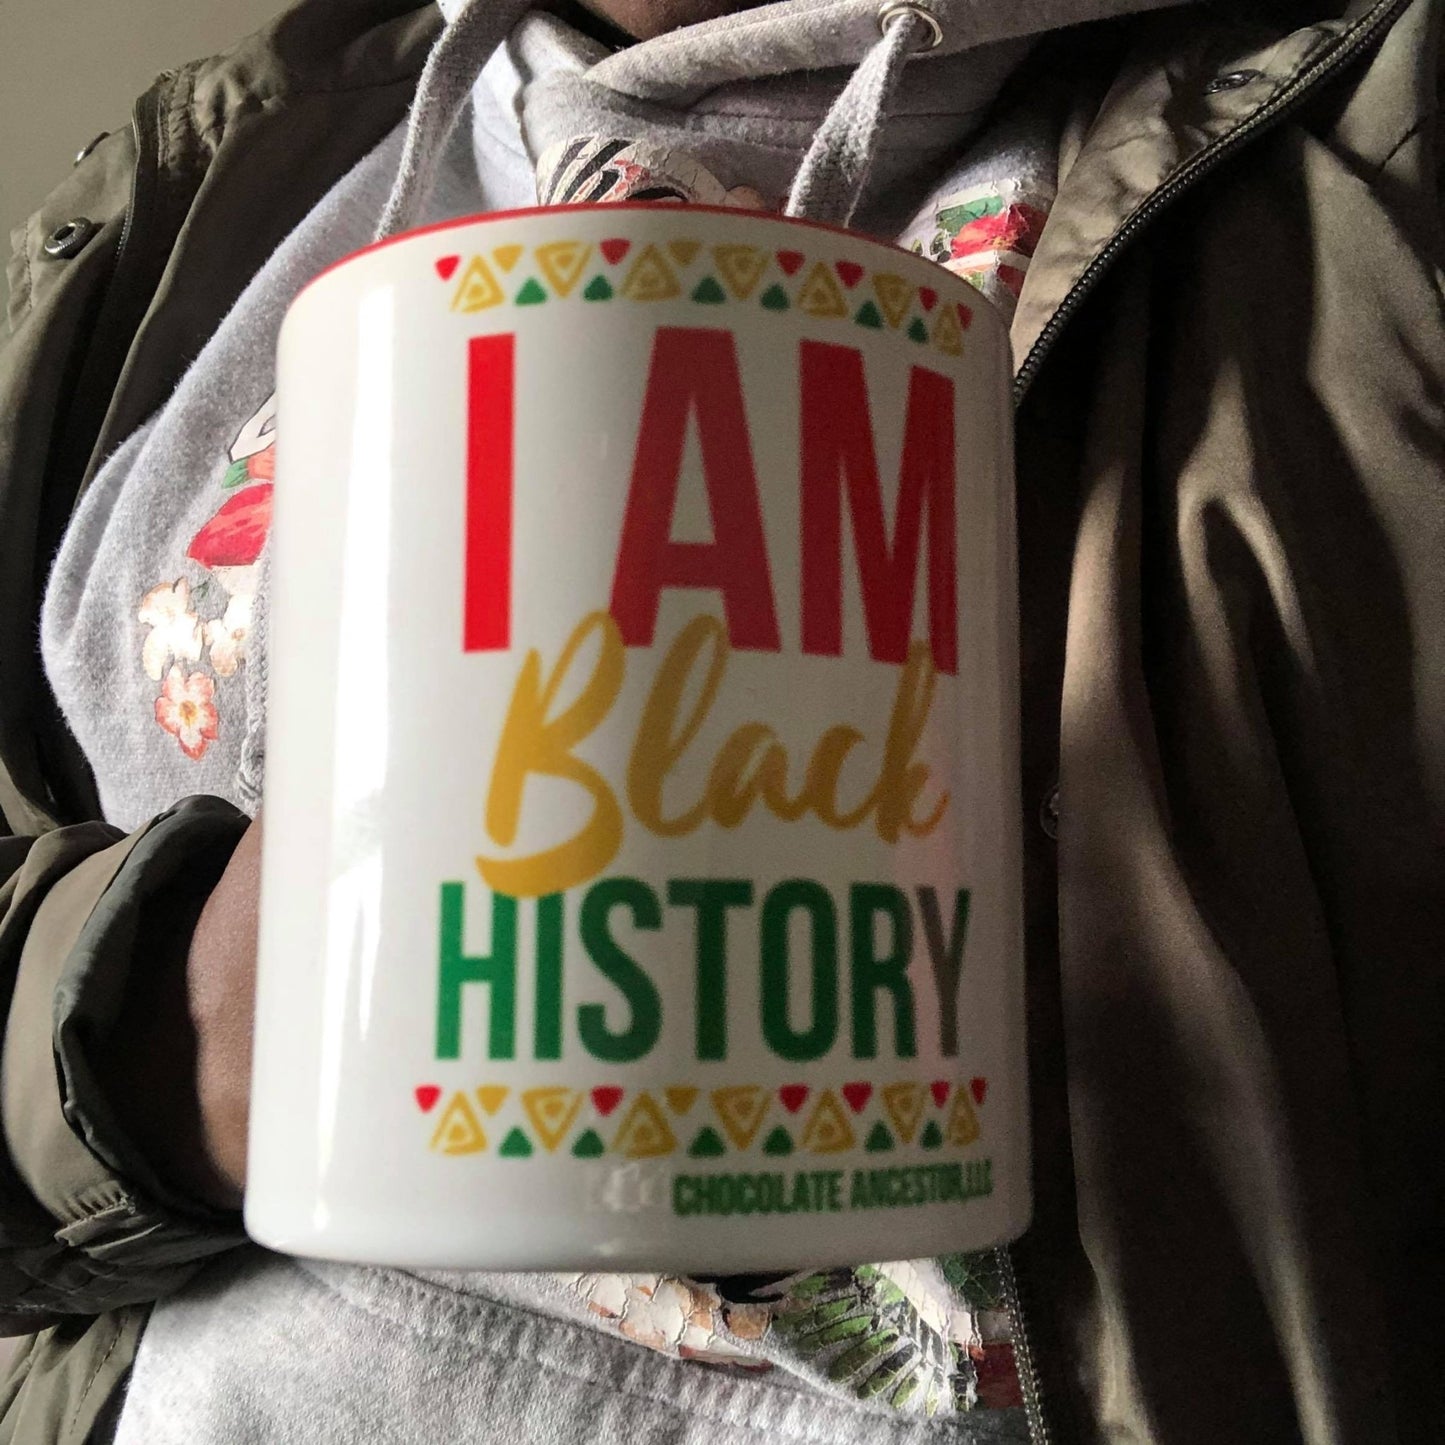 I Am Black History Mug with Color Inside - Chocolate Ancestor